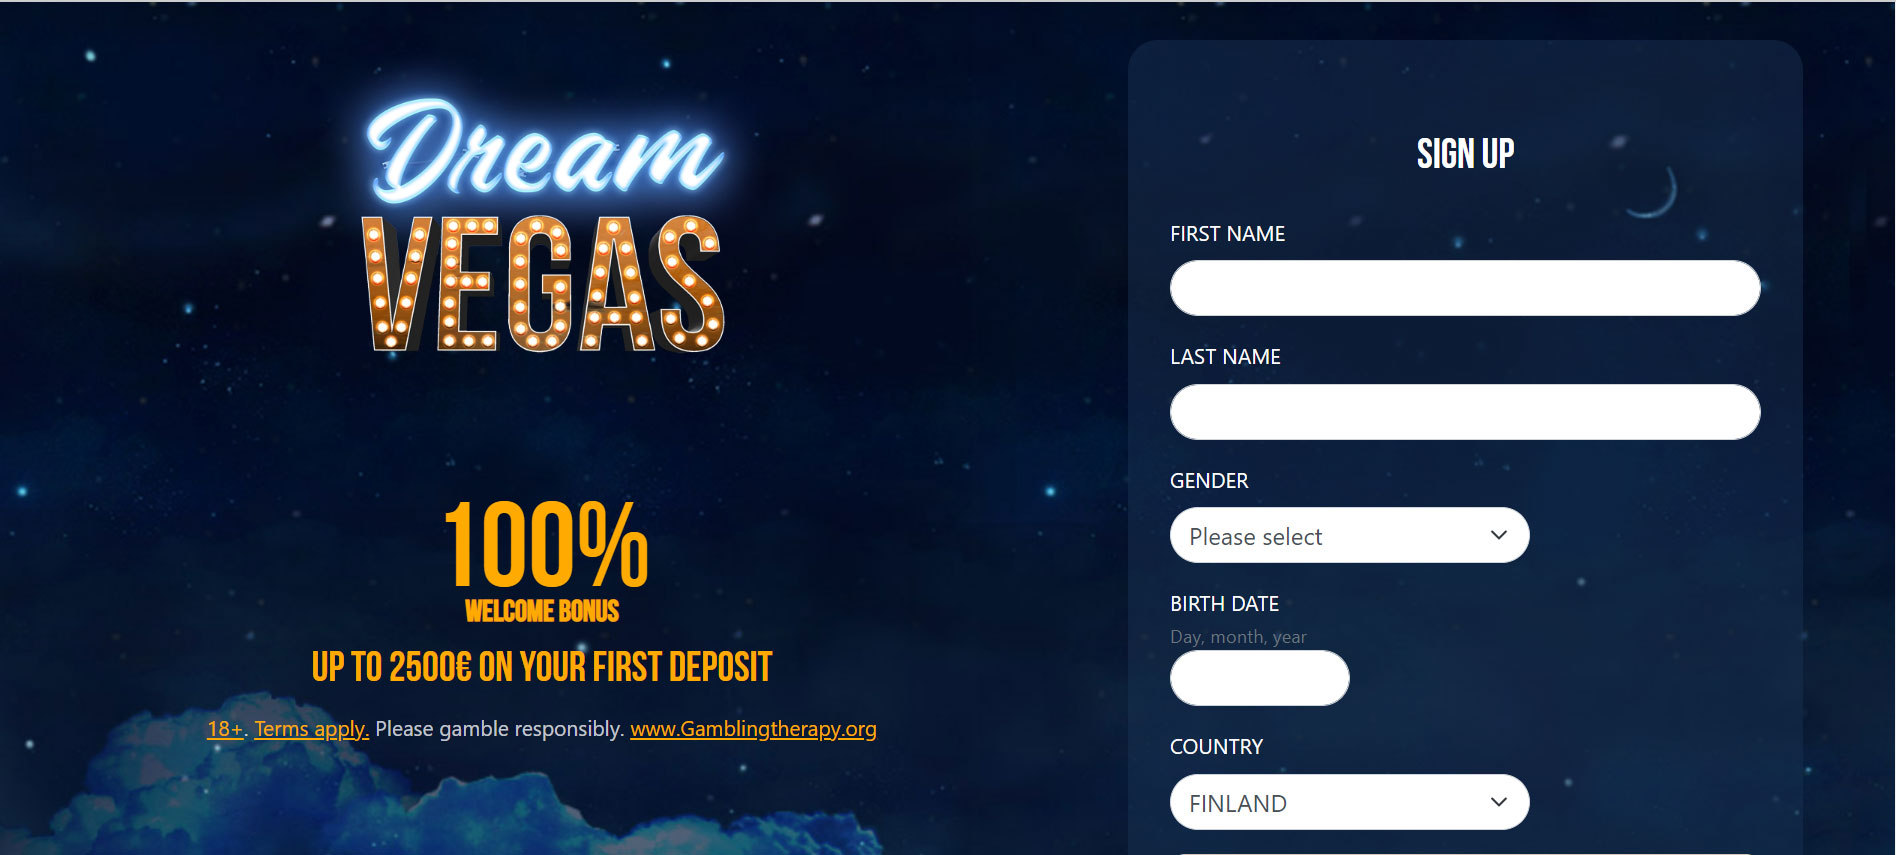 Dream Vegas Casino Registrations